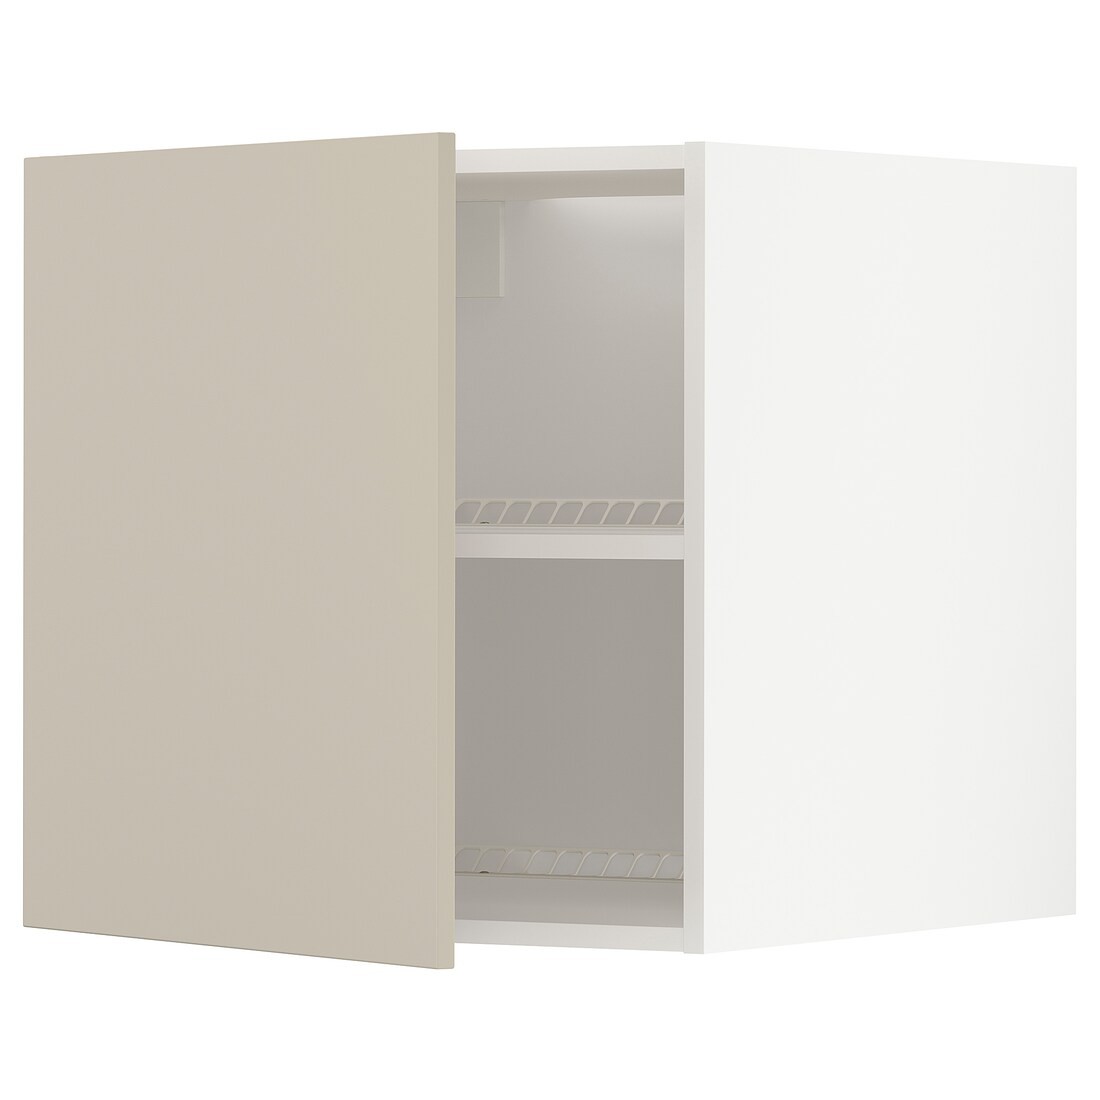 METOD МЕТОД Верхний шкаф для холодильника / морозильника, белый / Havstorp бежевый, 60x60 см